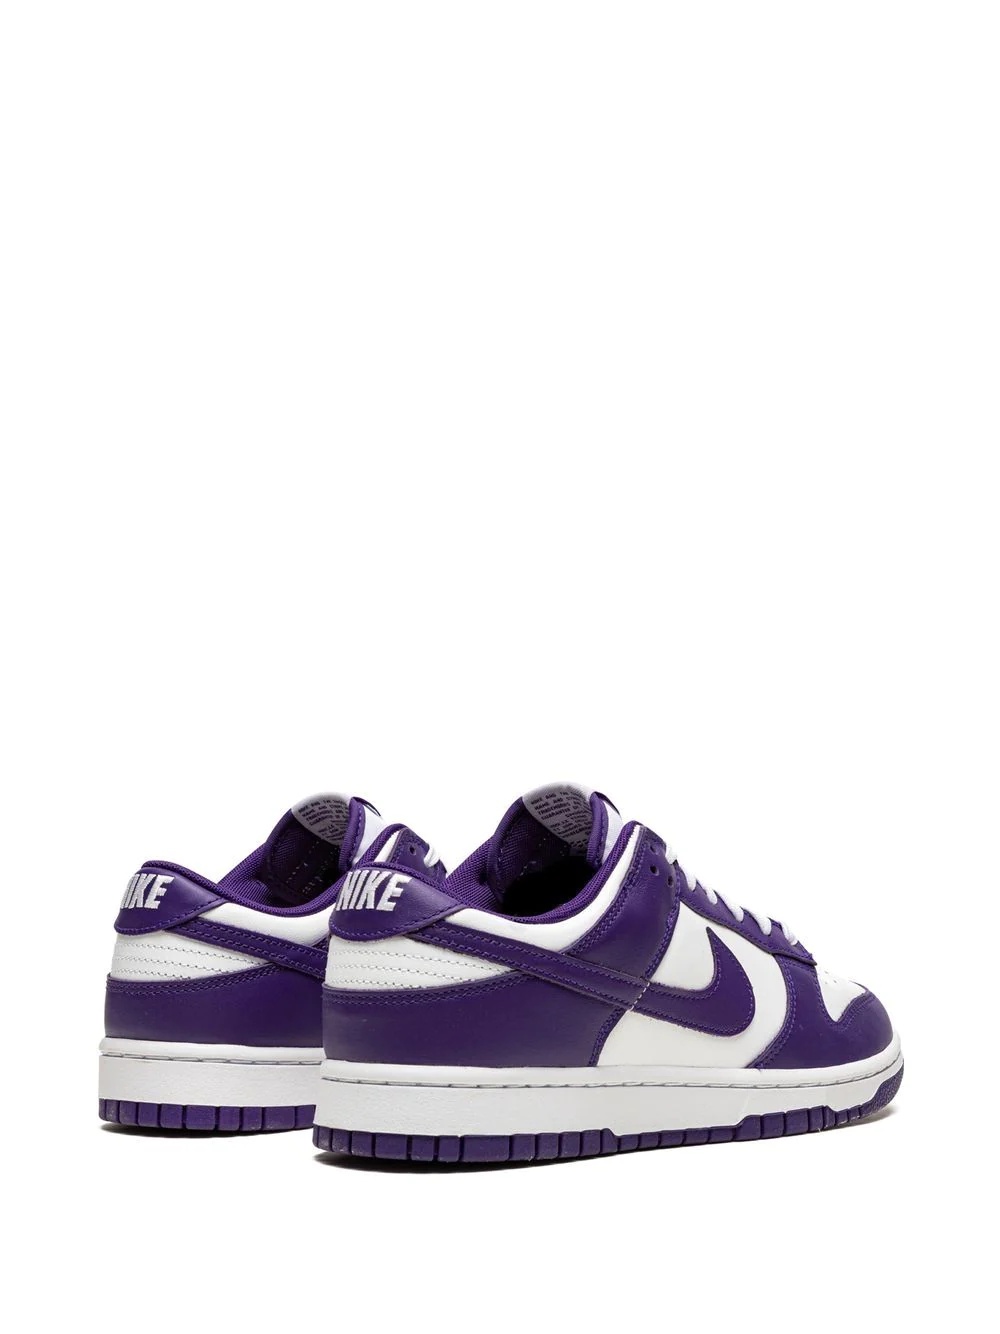 Dunk Low "Court Purple" sneakers - 3